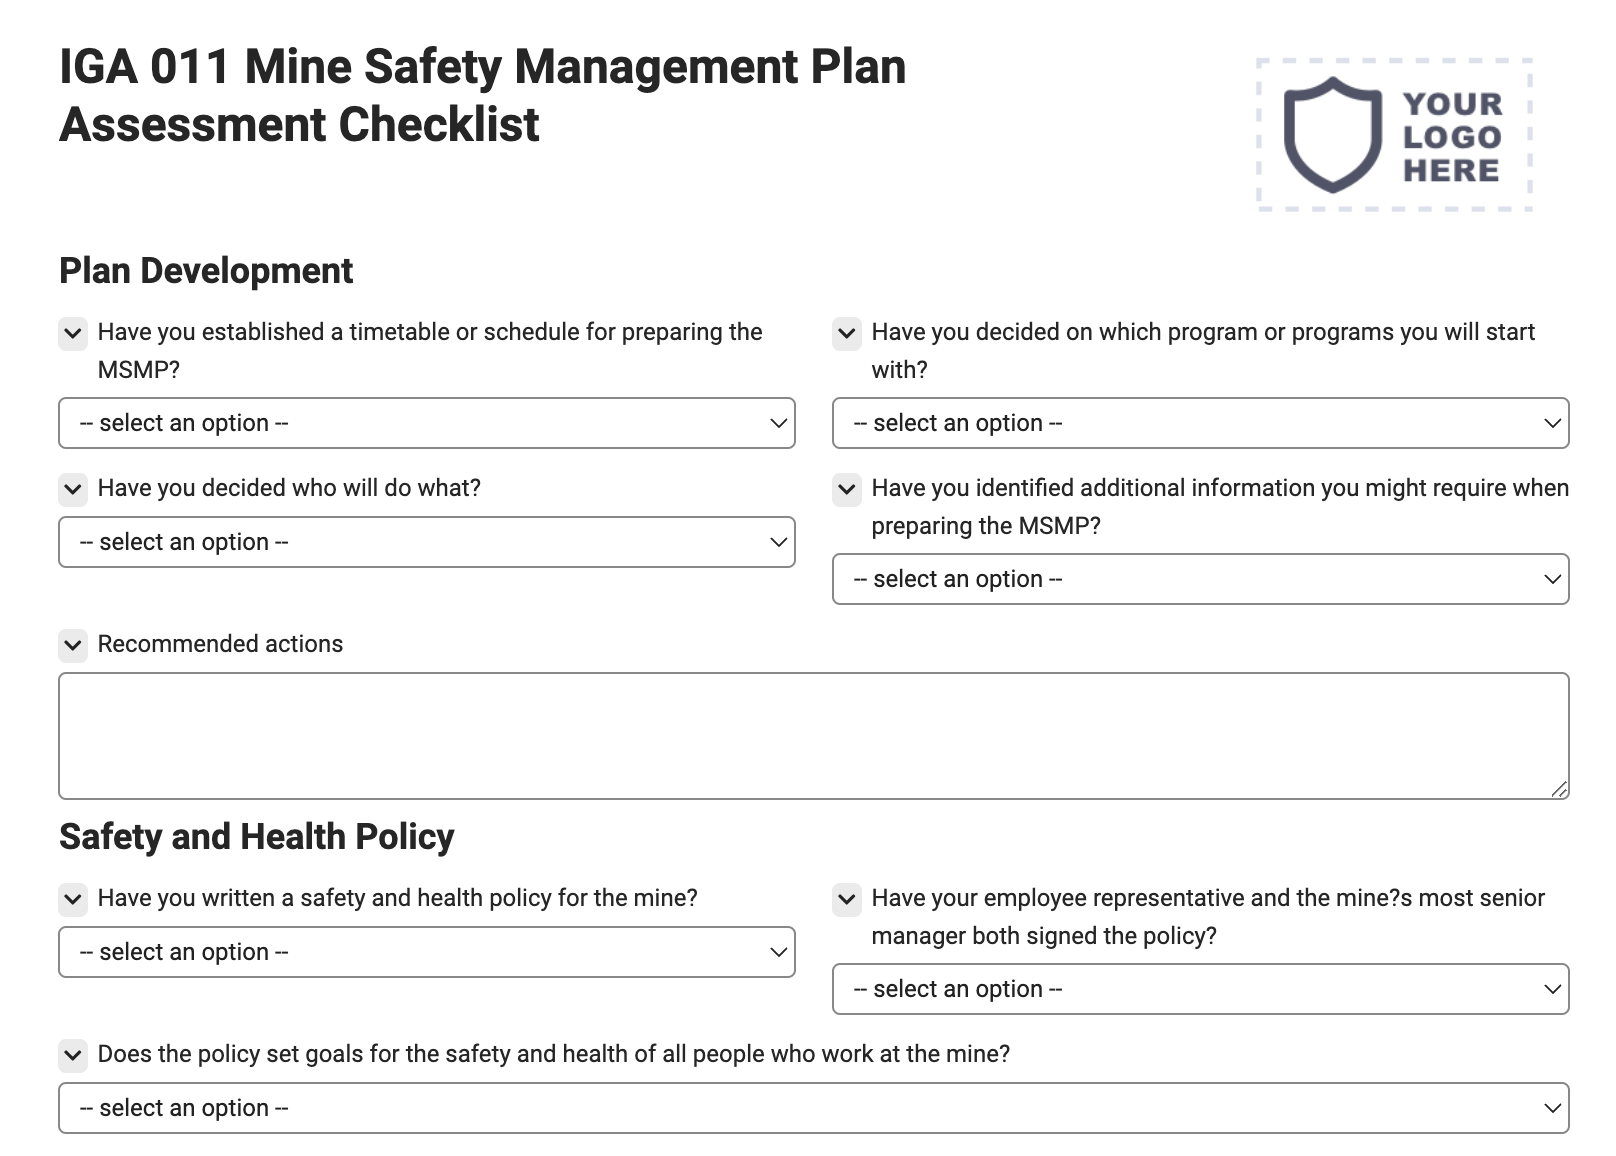 IGA 011 Mine Safety Management Plan Assessment Checklist